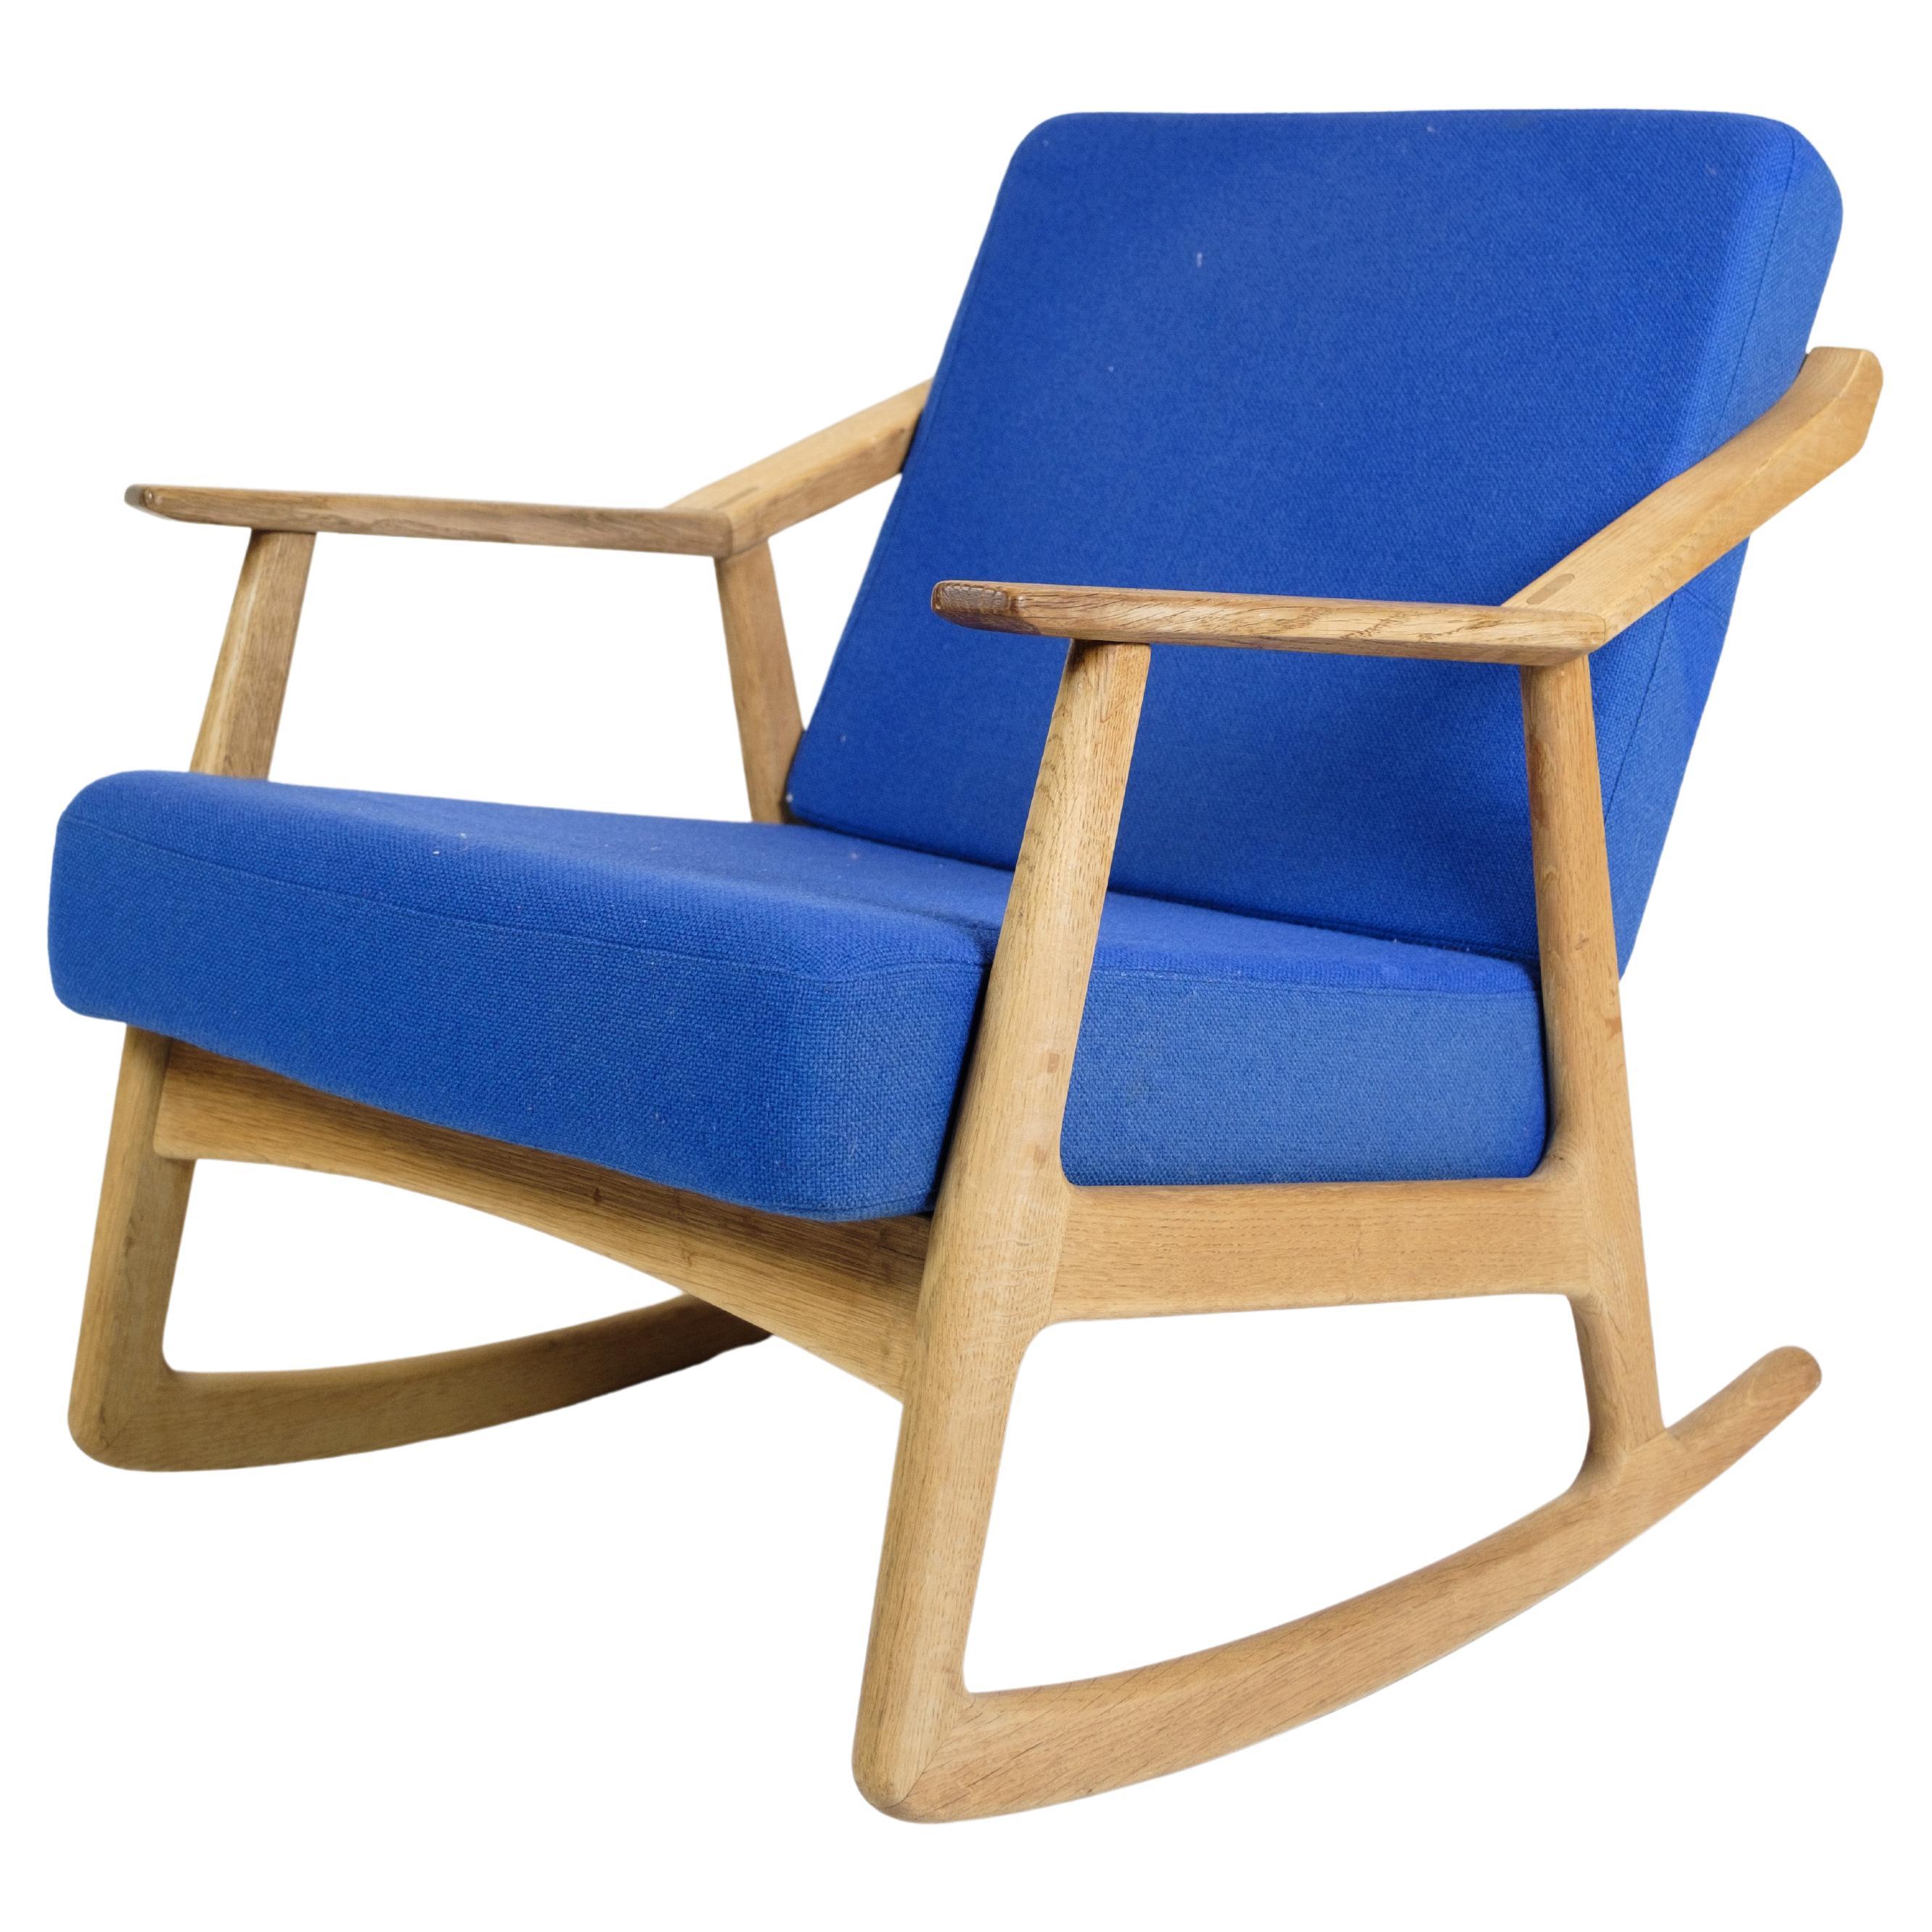 H. Brockmann-Petersen Rocking Chairs